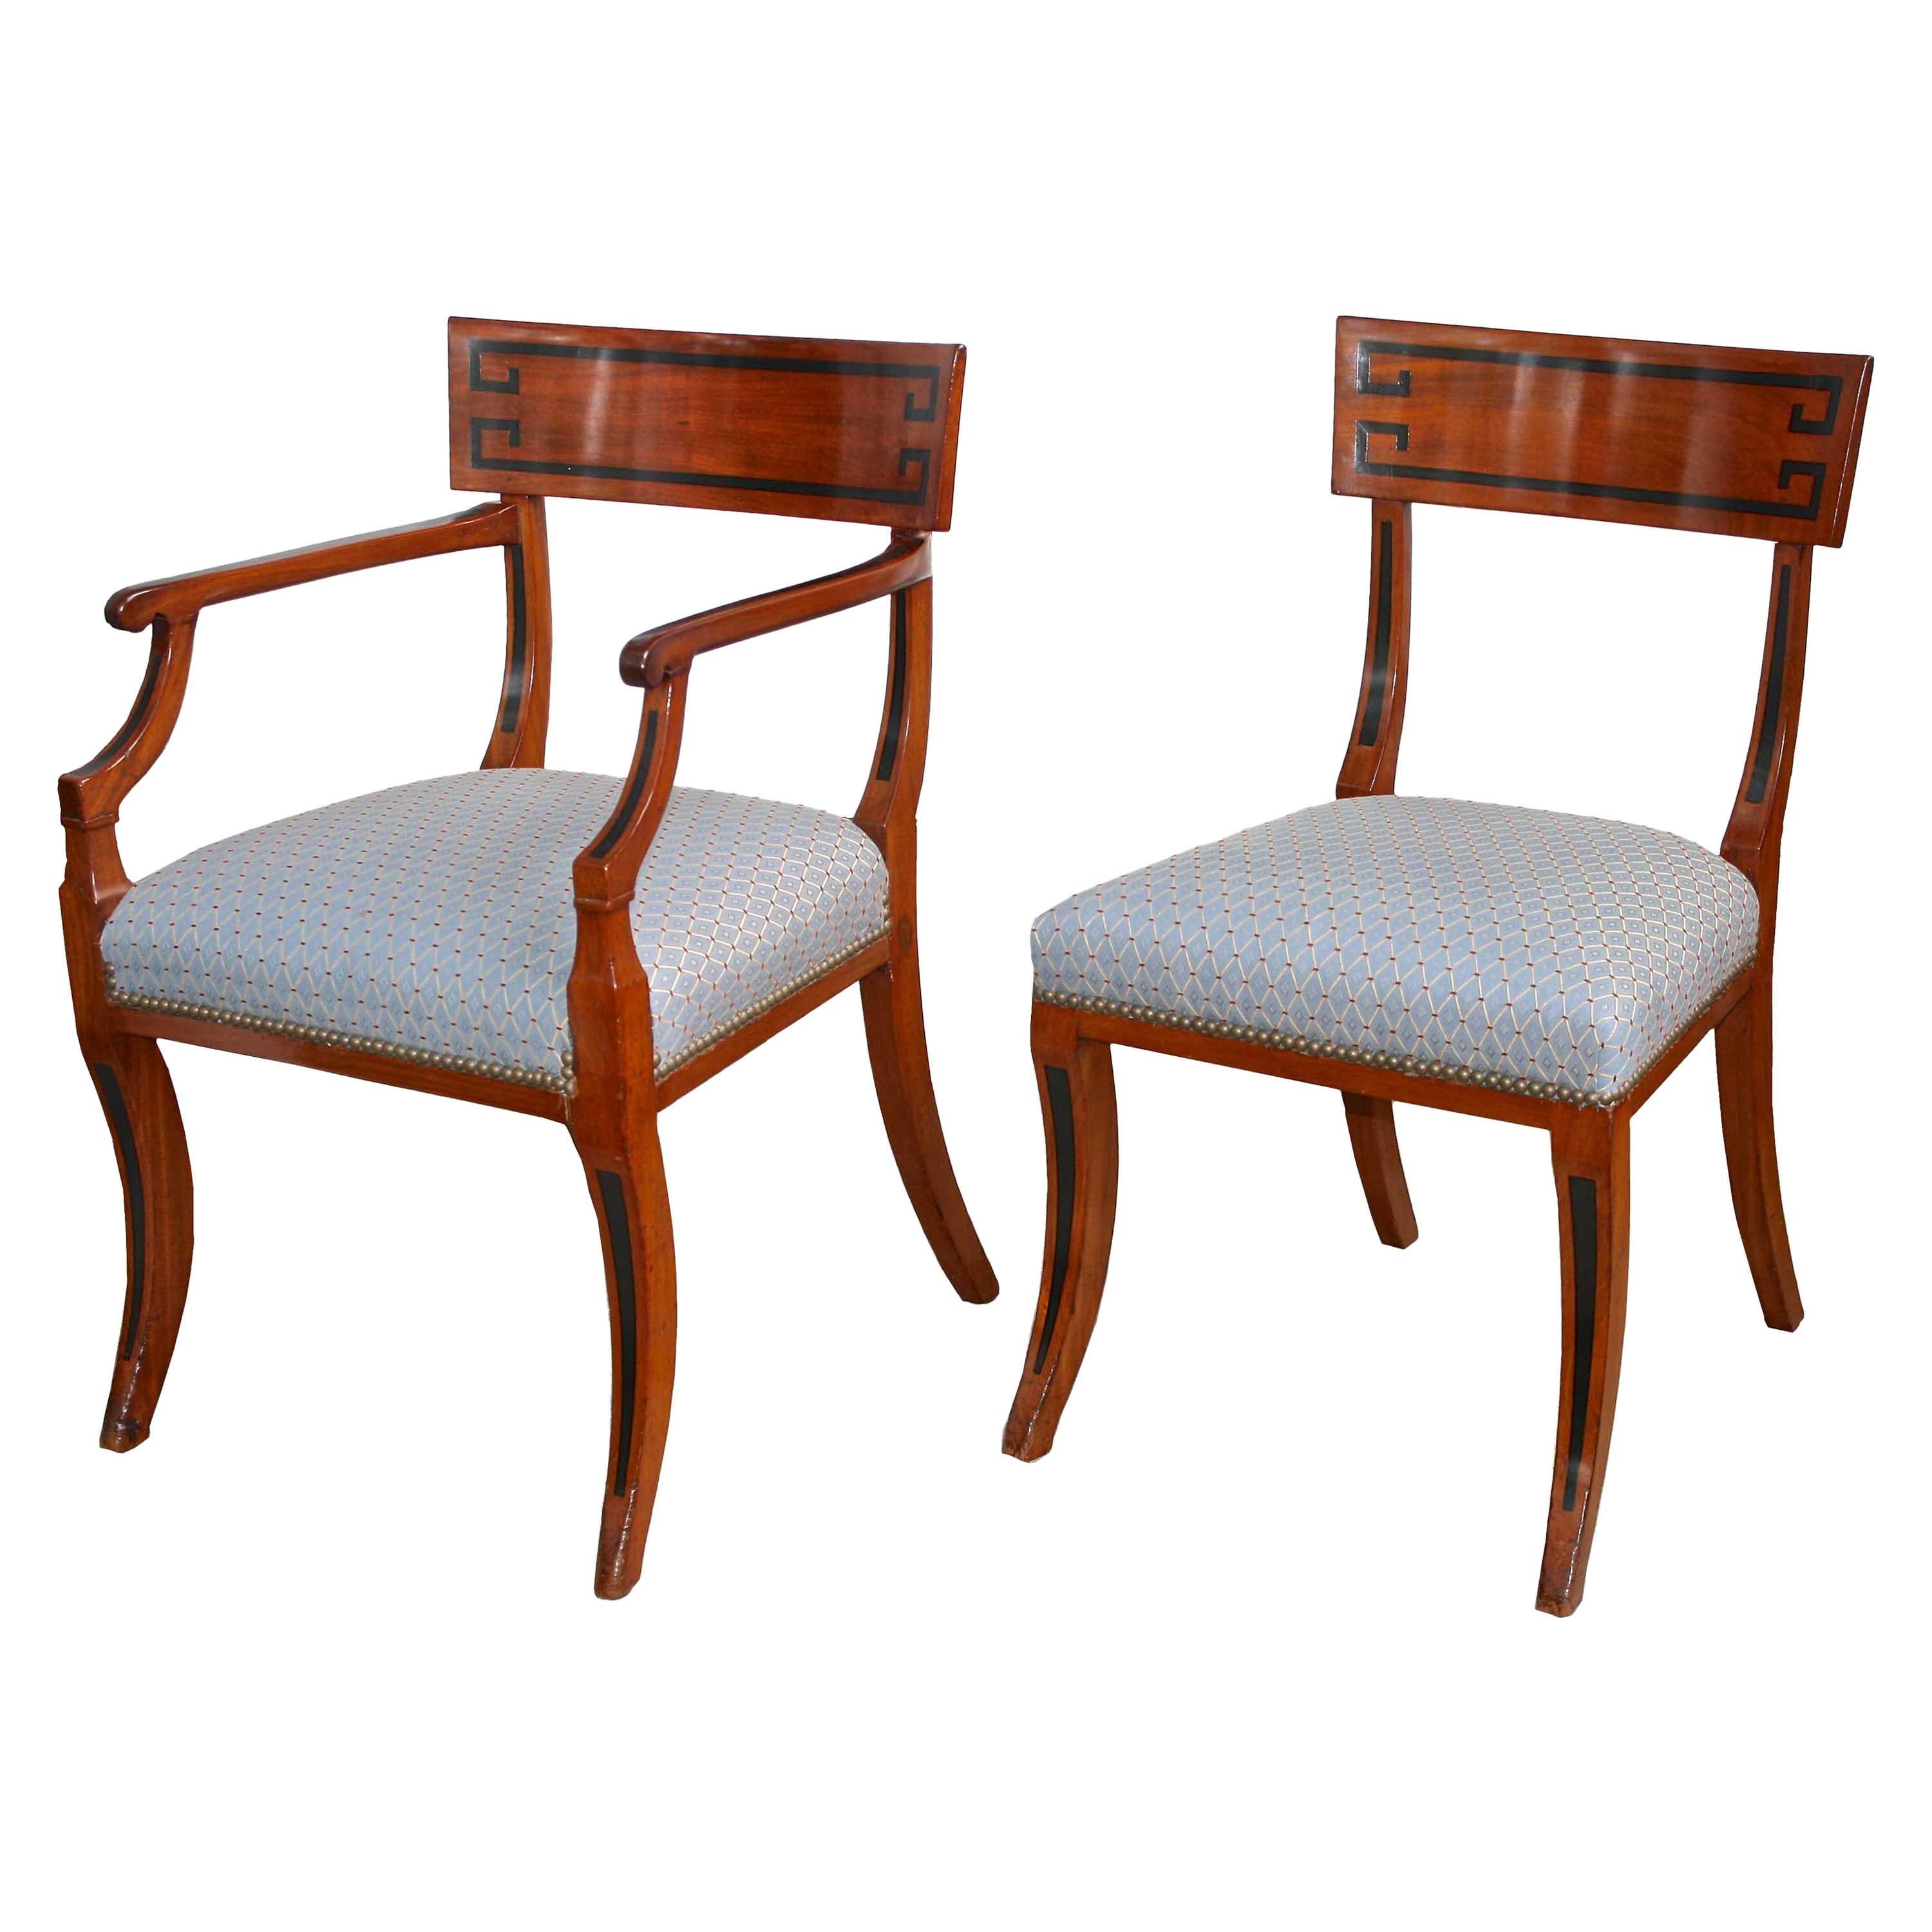 FOURTEEN English Regency Klismos Dining Chairs